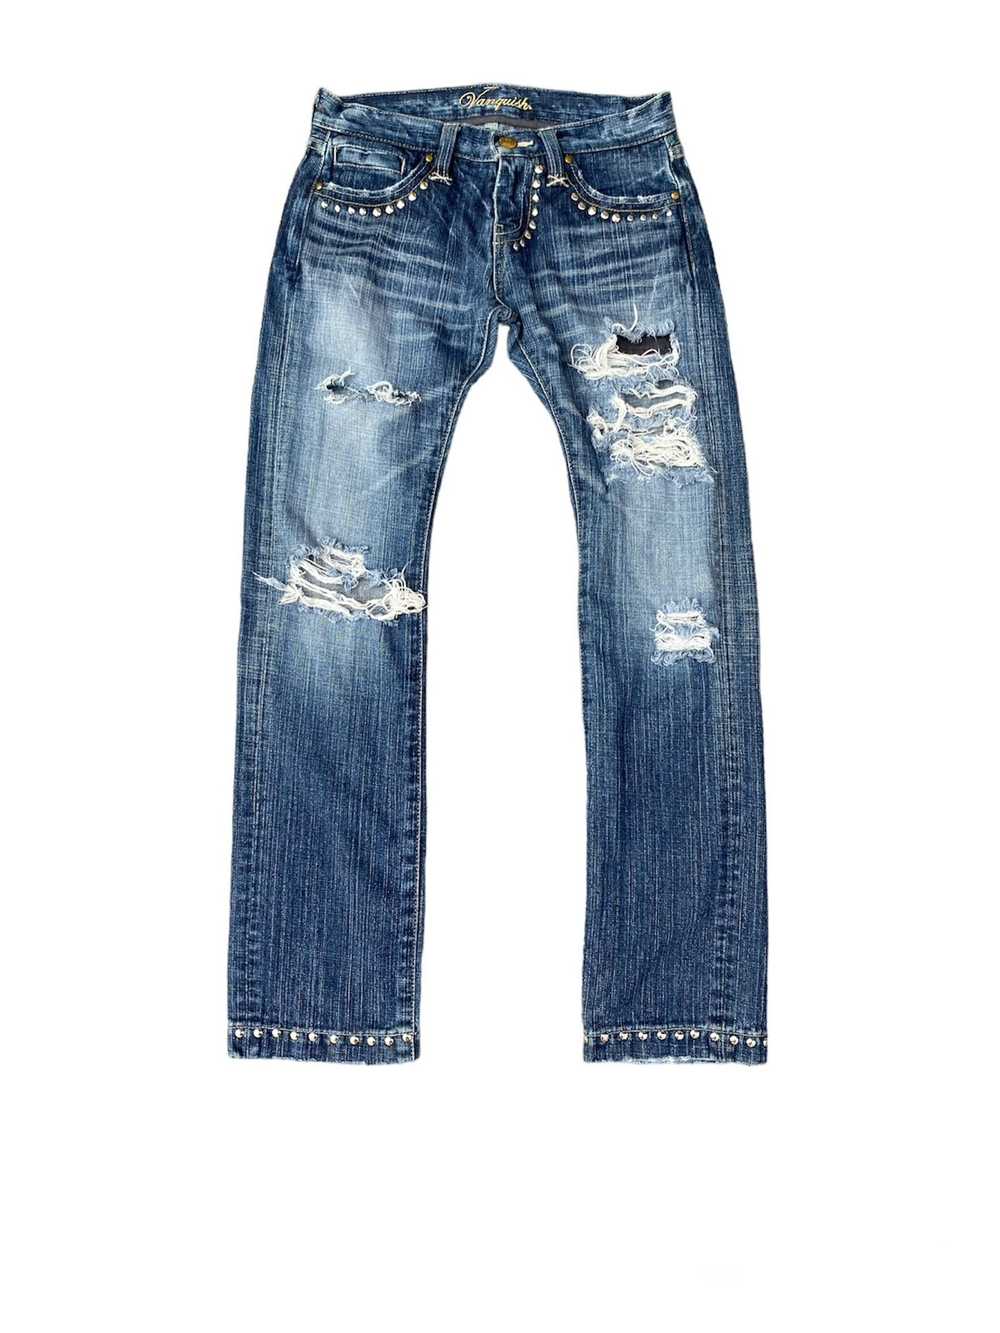 Vanquish Vanquish Gold Distressed Studded Jeans - image 2